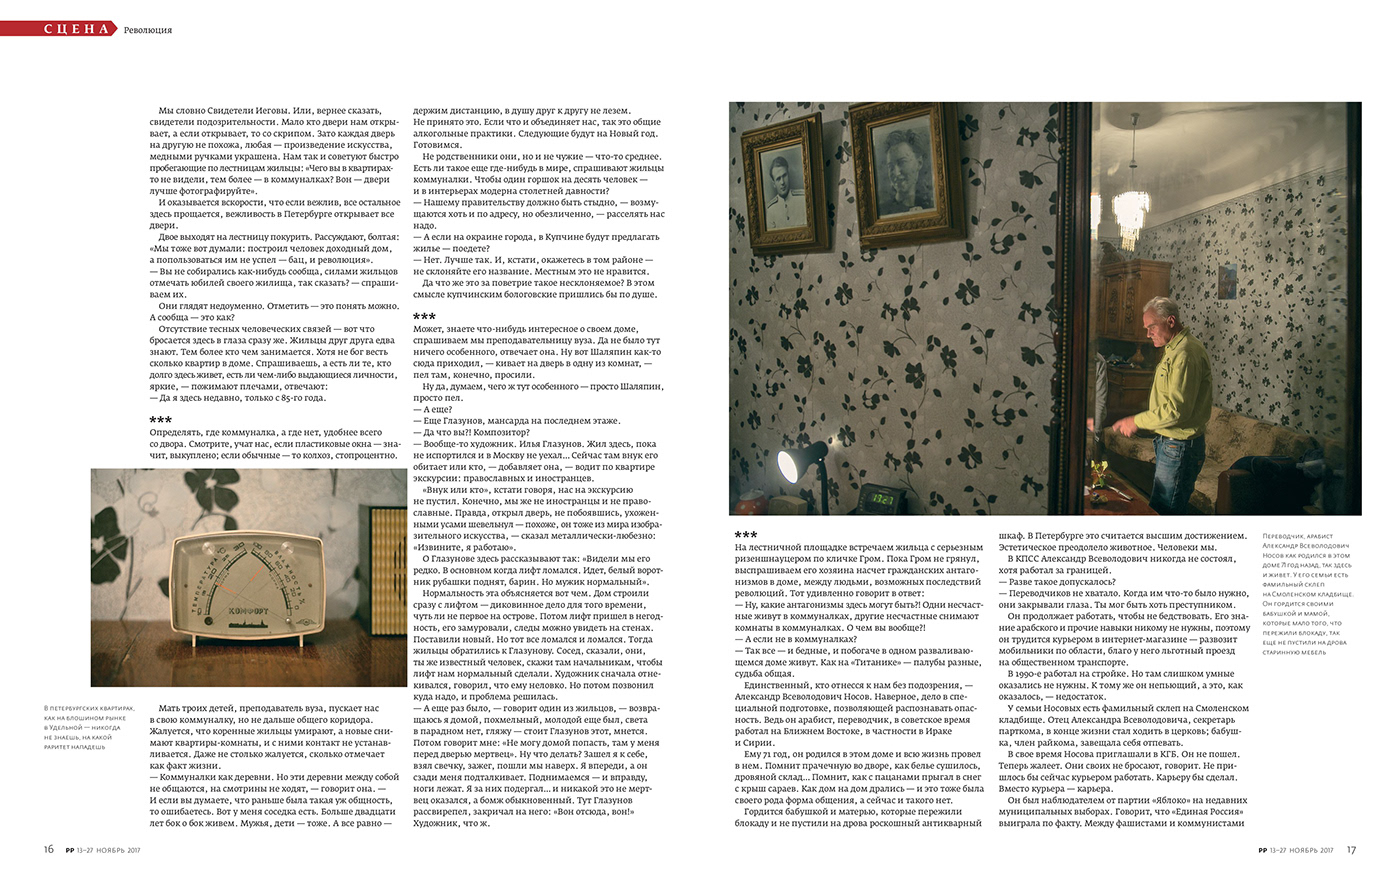 Photojornalism Russia reportage report interview portrait